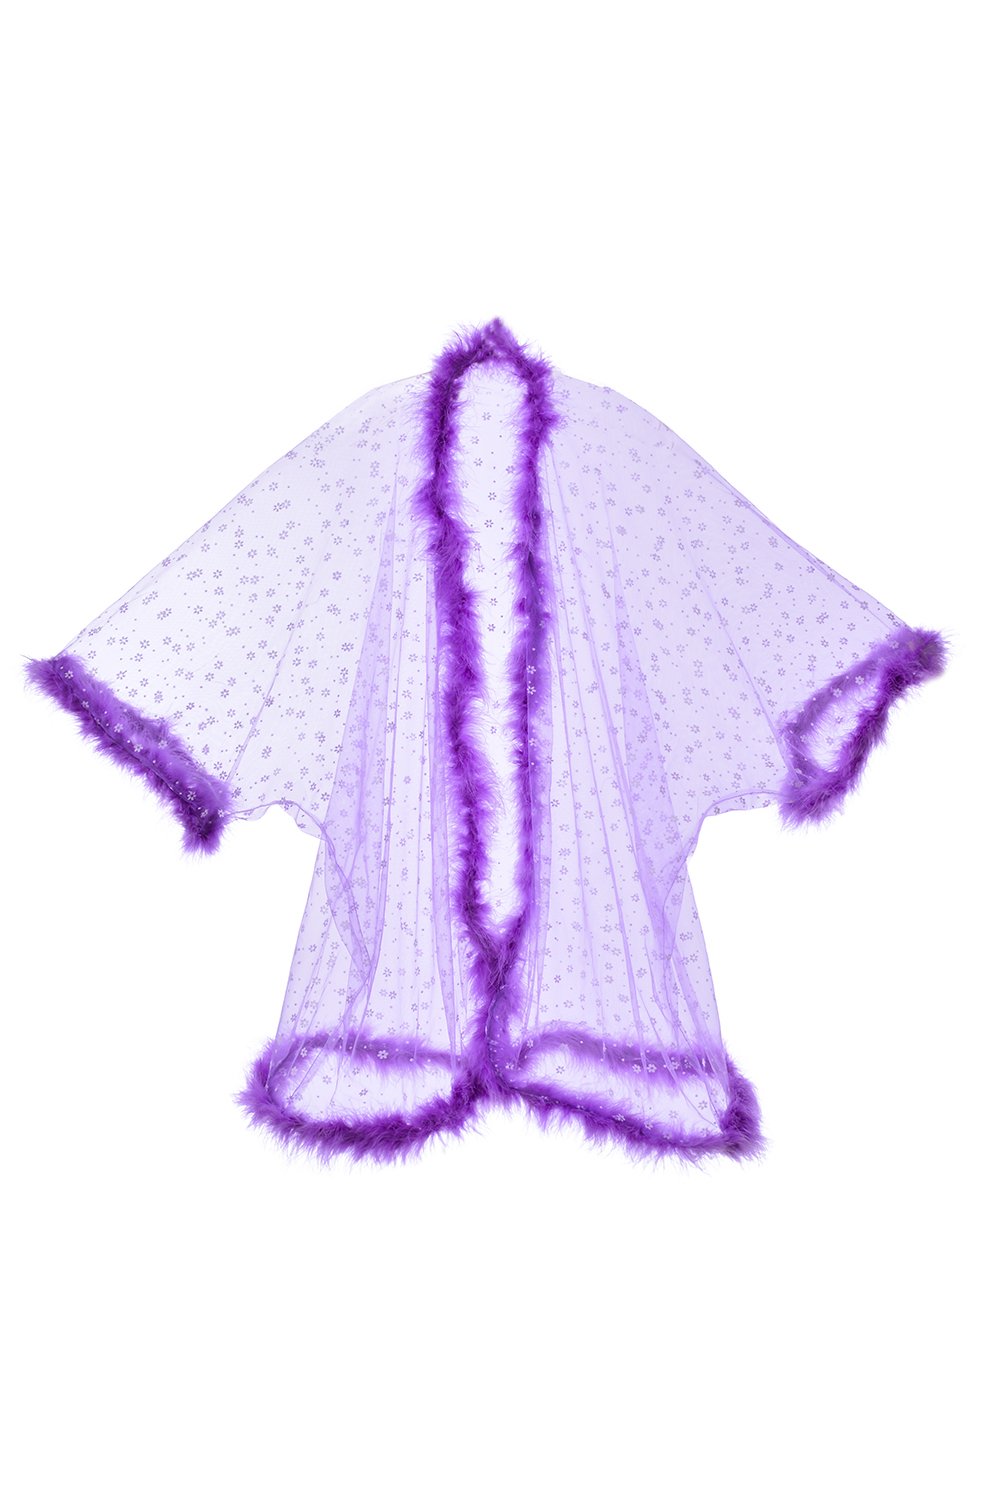 Fuzzy Kimono - Lavender Blossom